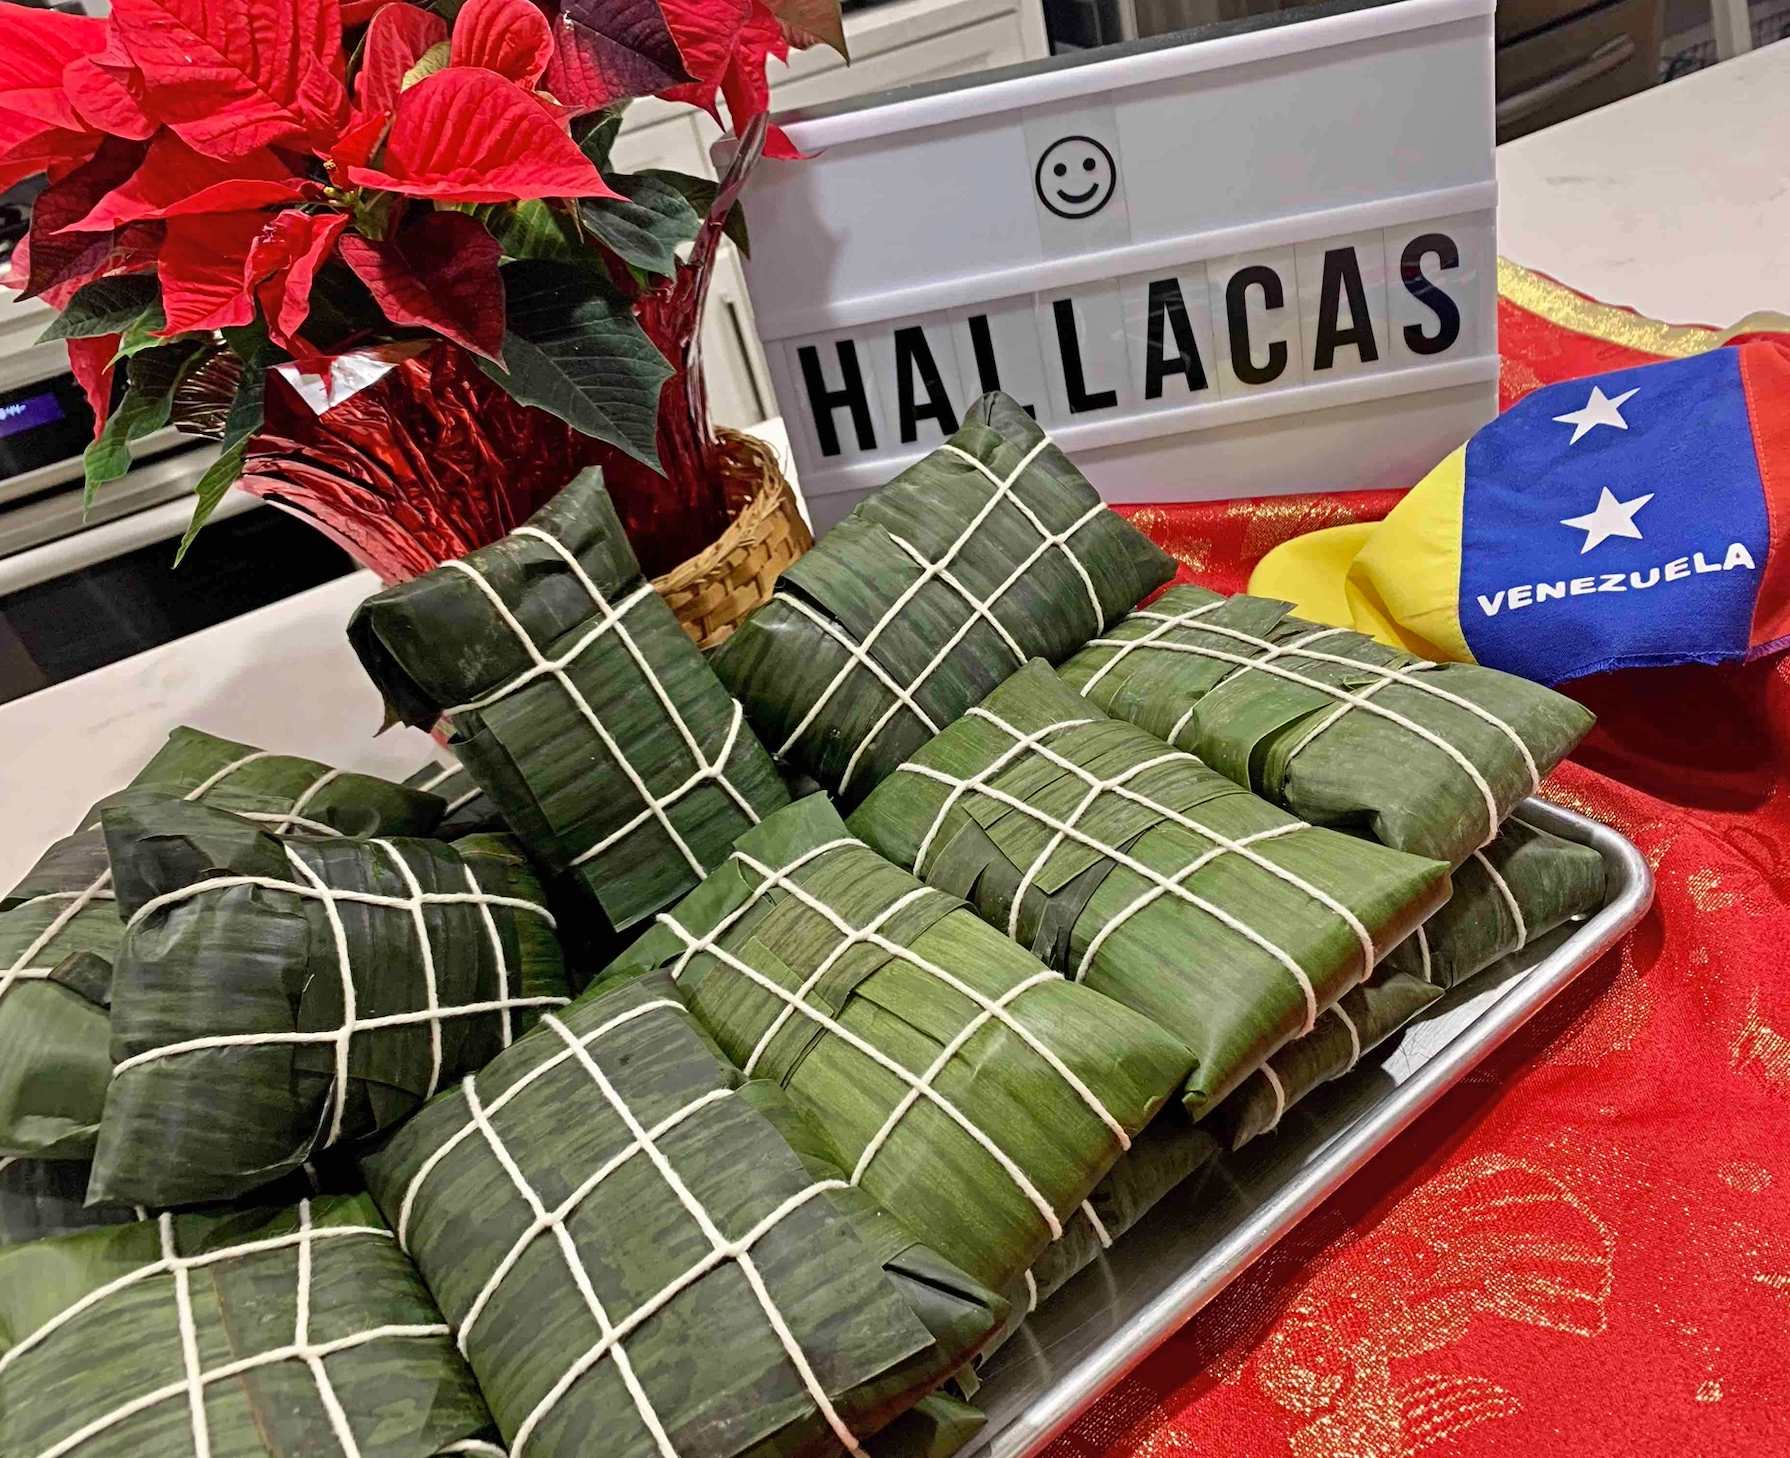 Liliana's Hallacas, Venezuela's Holiday Tradition – Familia Kitchen